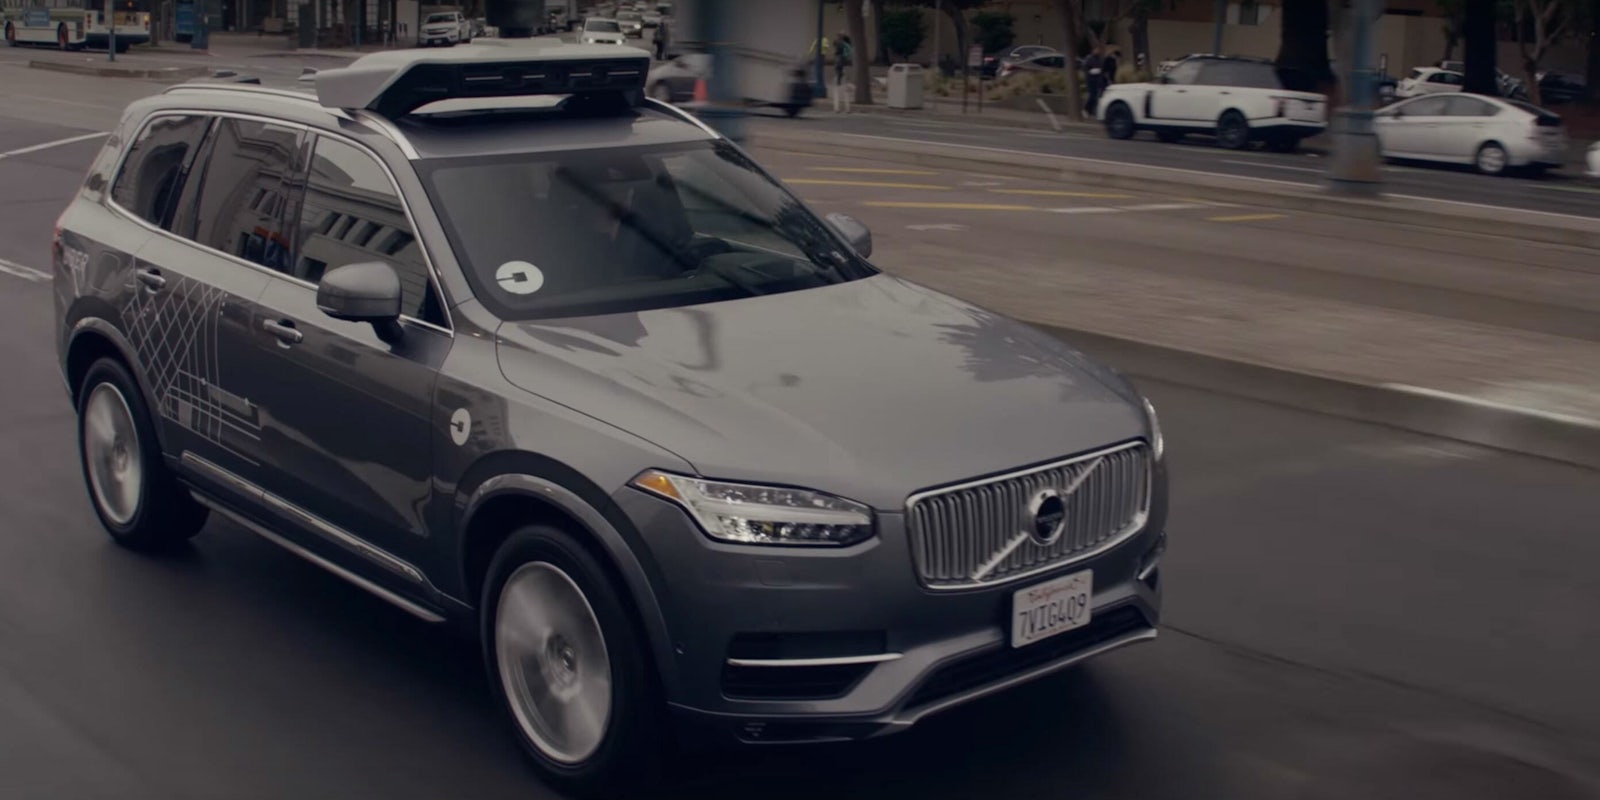 uber volvo self-driving autonomous car